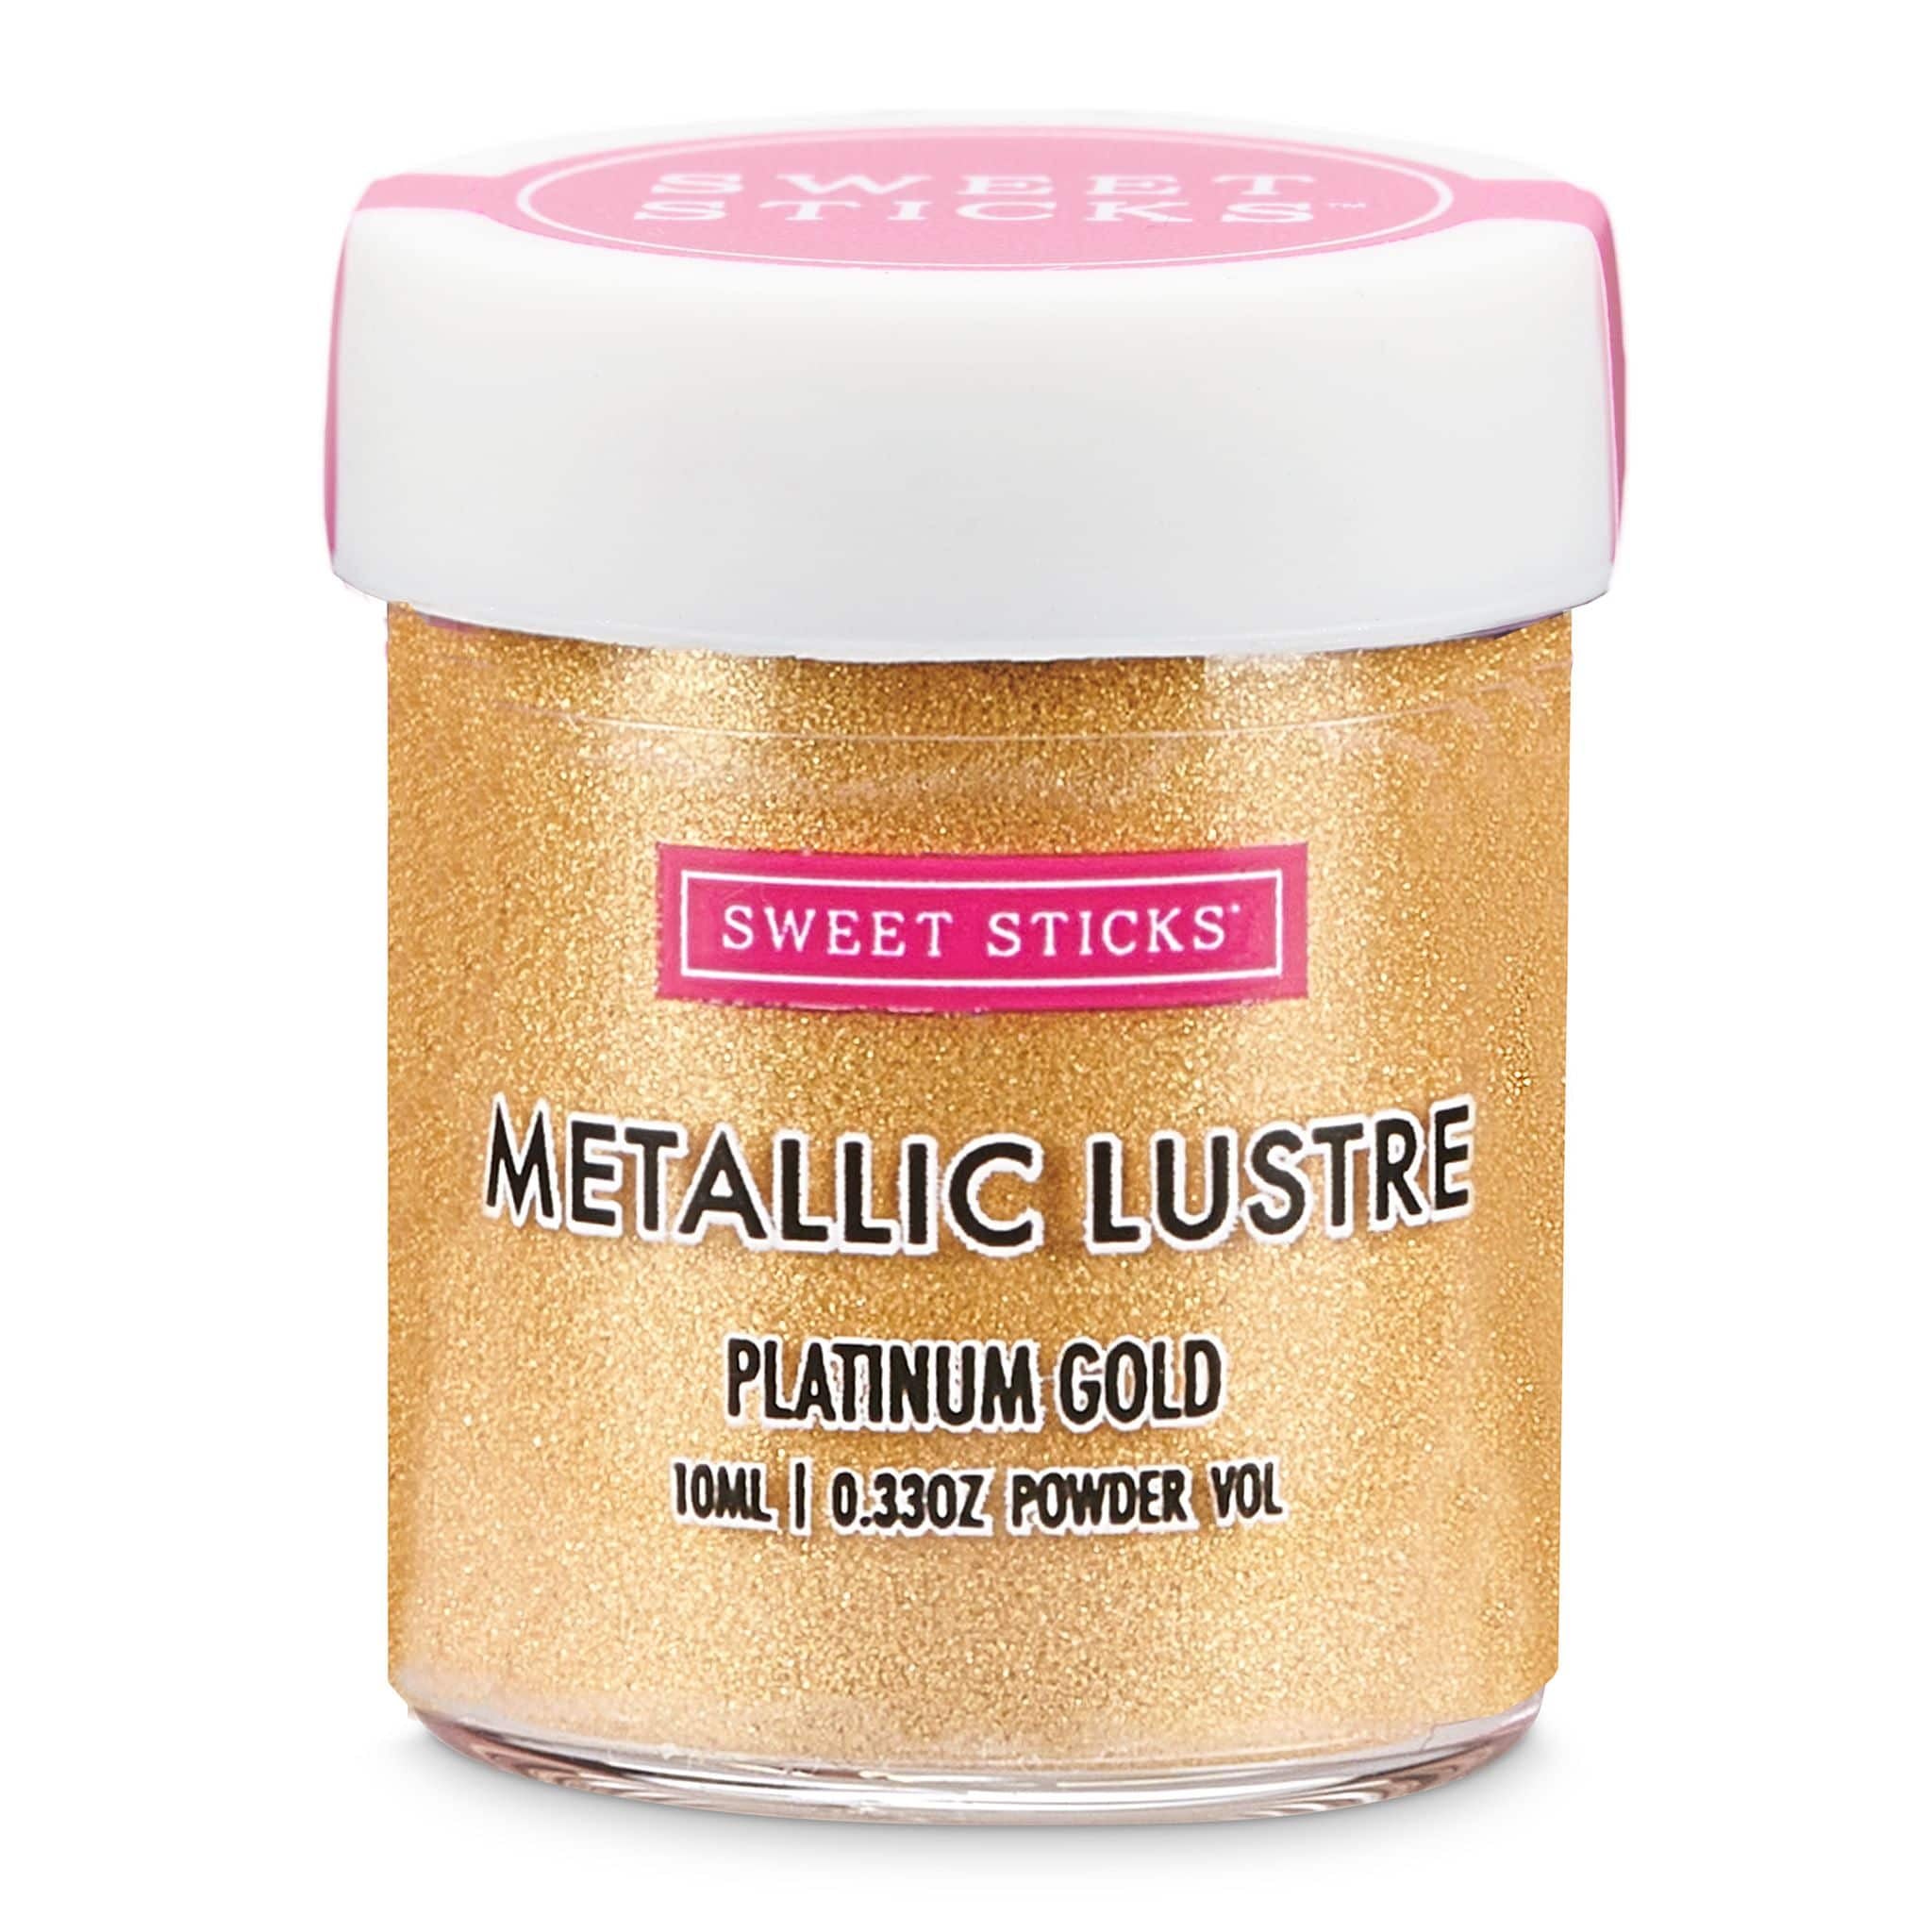 Sweet Sticks Metallic Lustre 4g - Platinum Gold